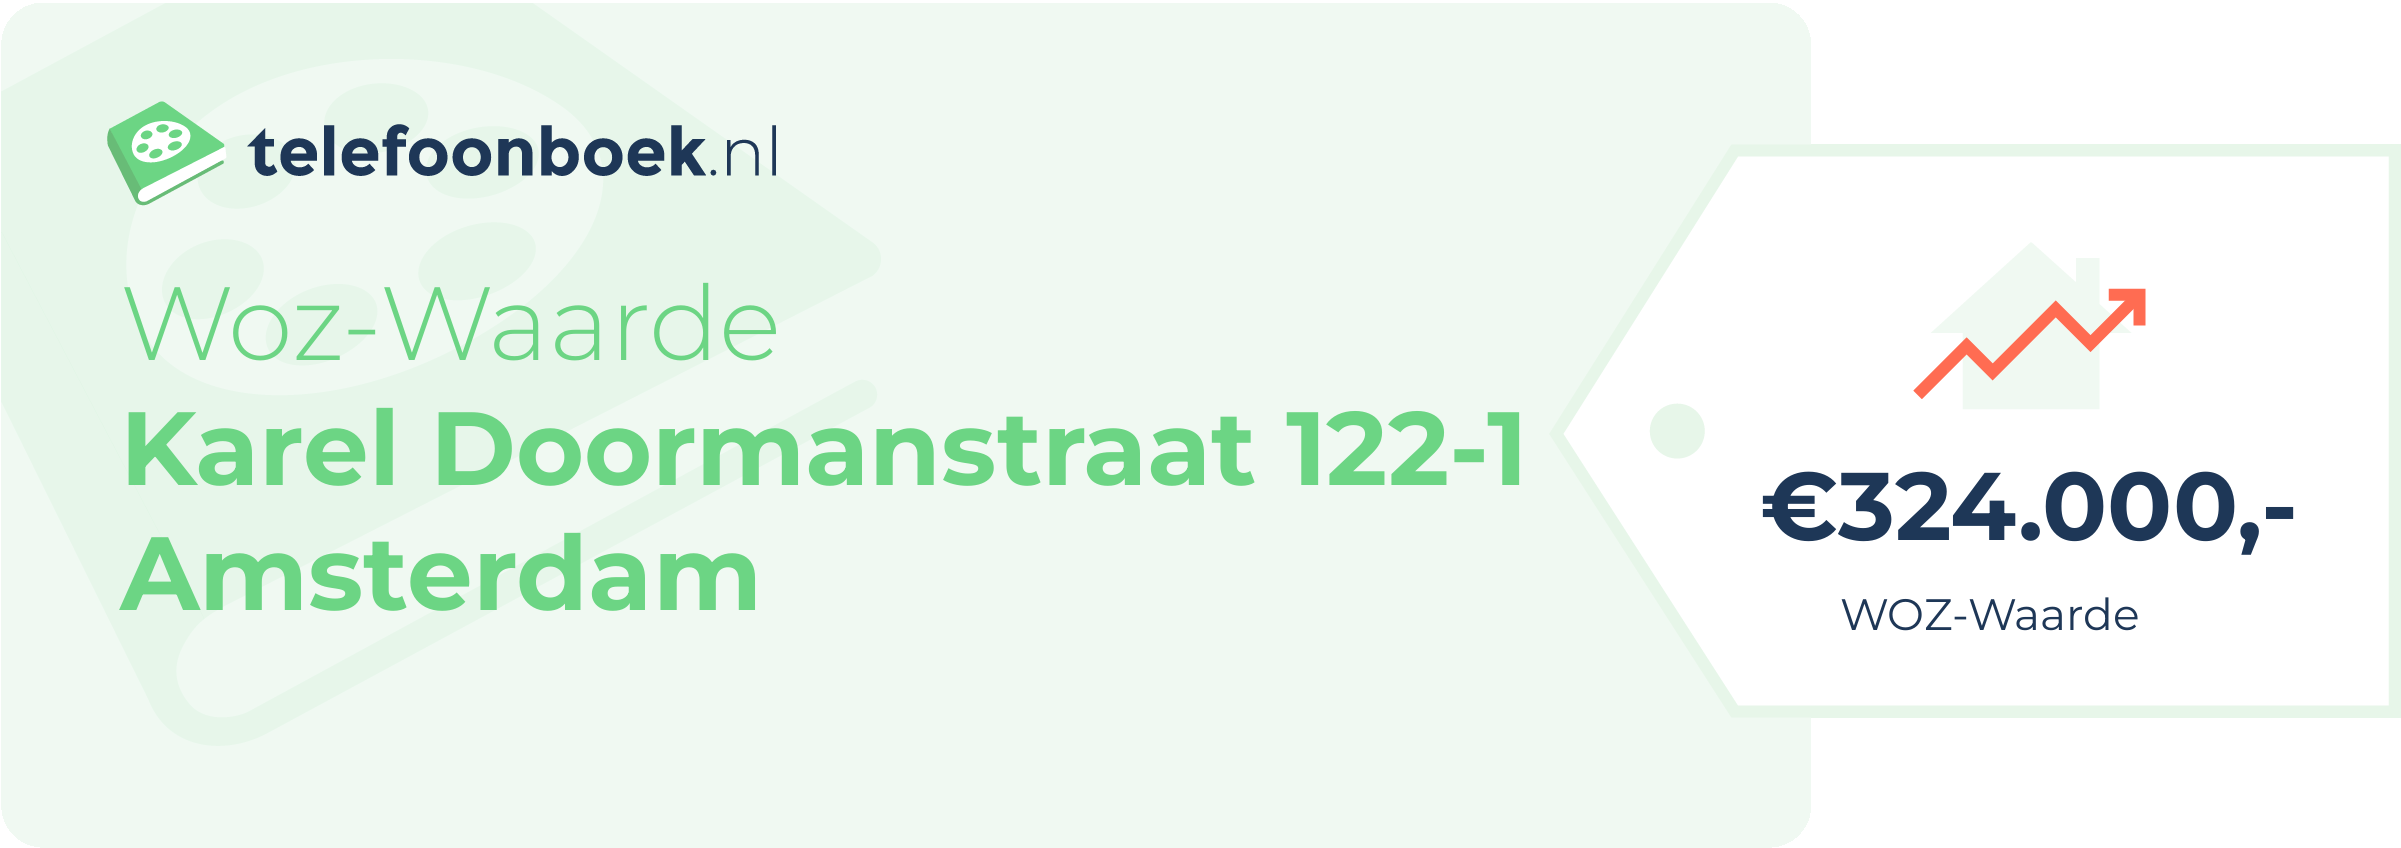 WOZ-waarde Karel Doormanstraat 122-1 Amsterdam